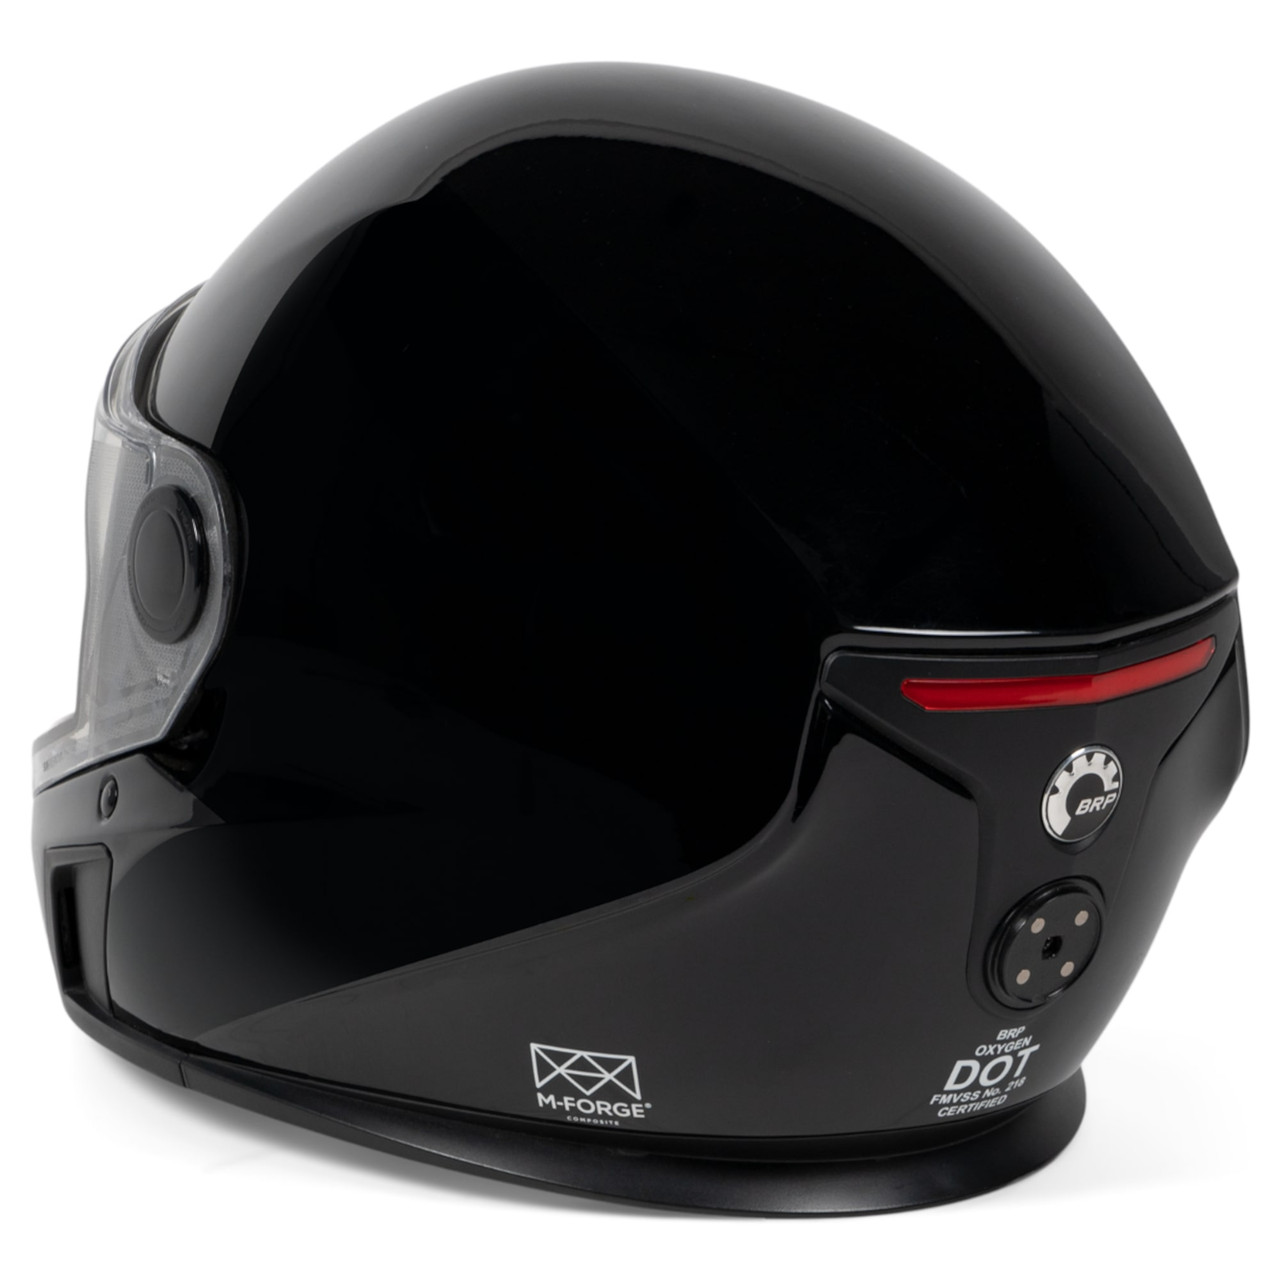 Ski-Doo New OEM, Heated Oxygen Helmet (DOT) Large, 9290190990